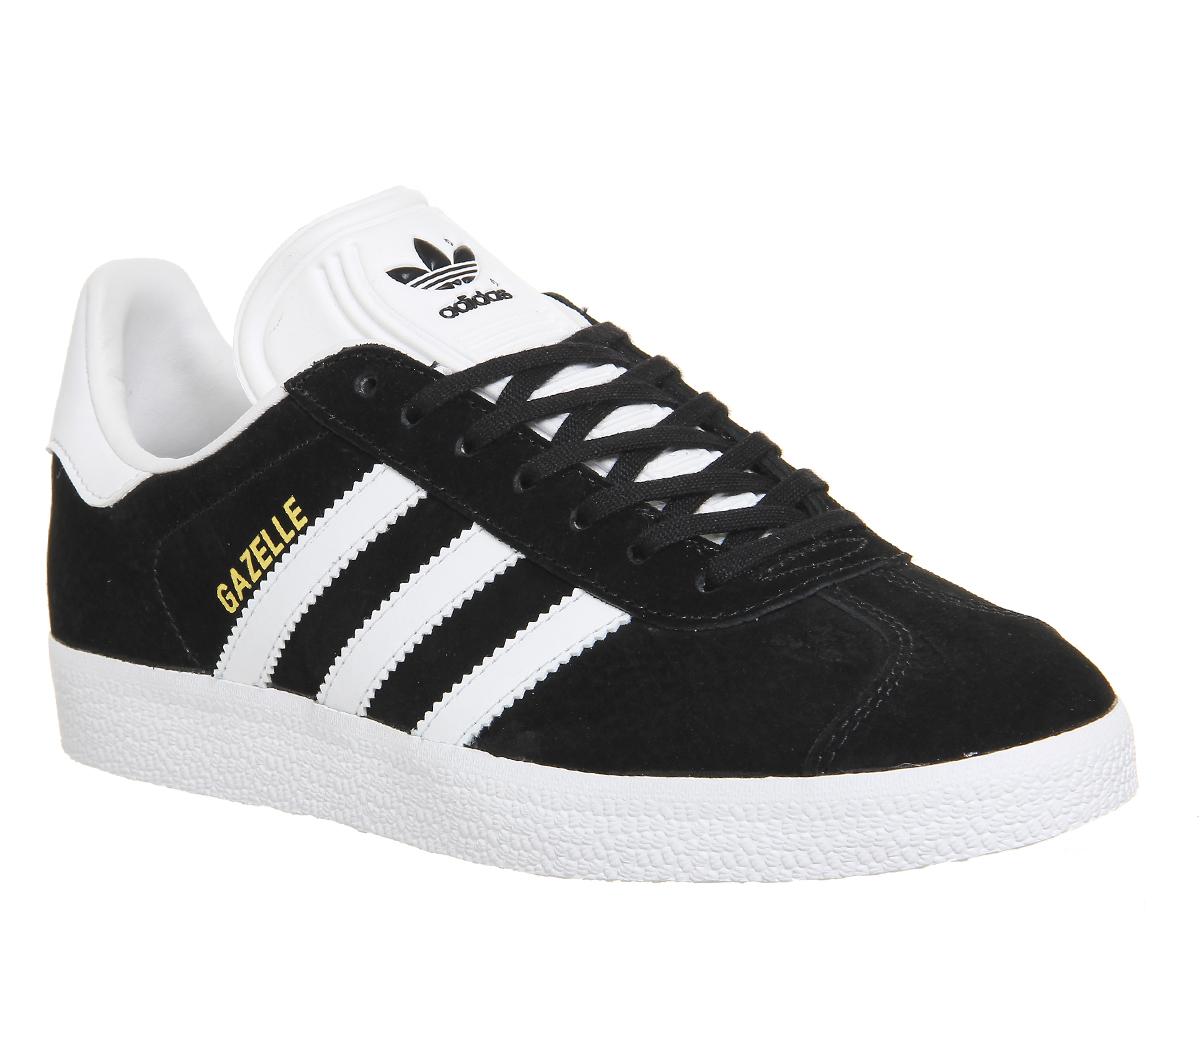 adidas Gazelle Core Black White - His trainers